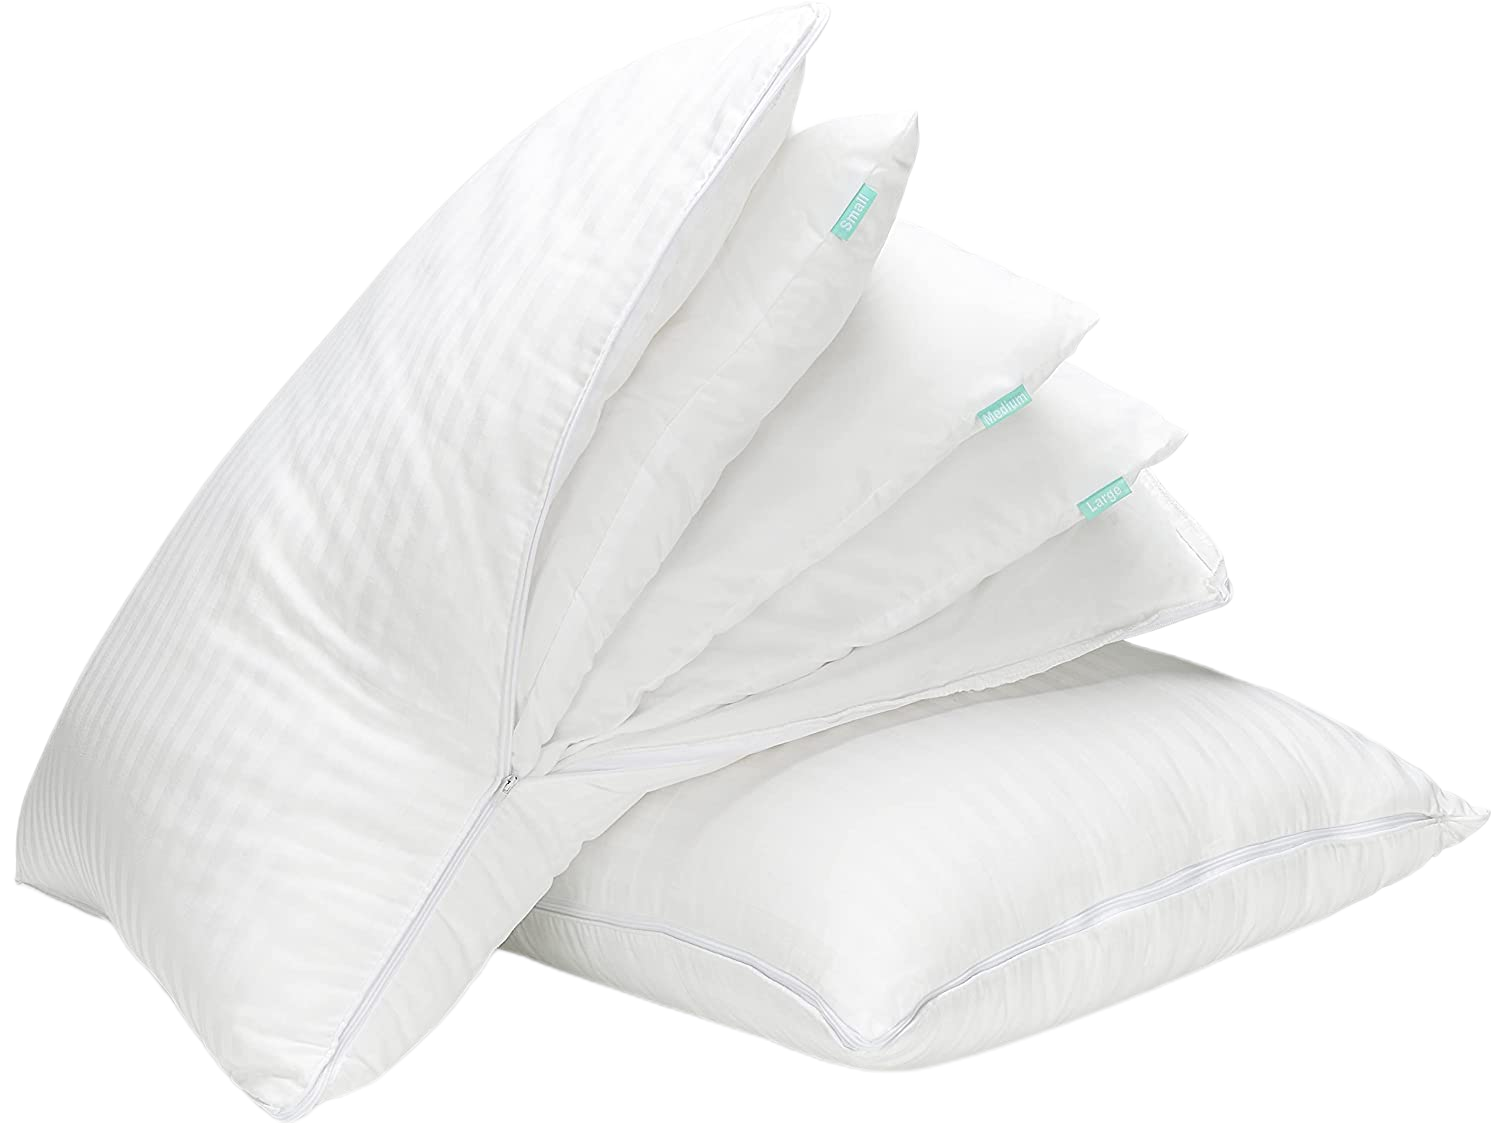 EverSnug Adjustable Layer Pillows for Sleeping - Set of 2